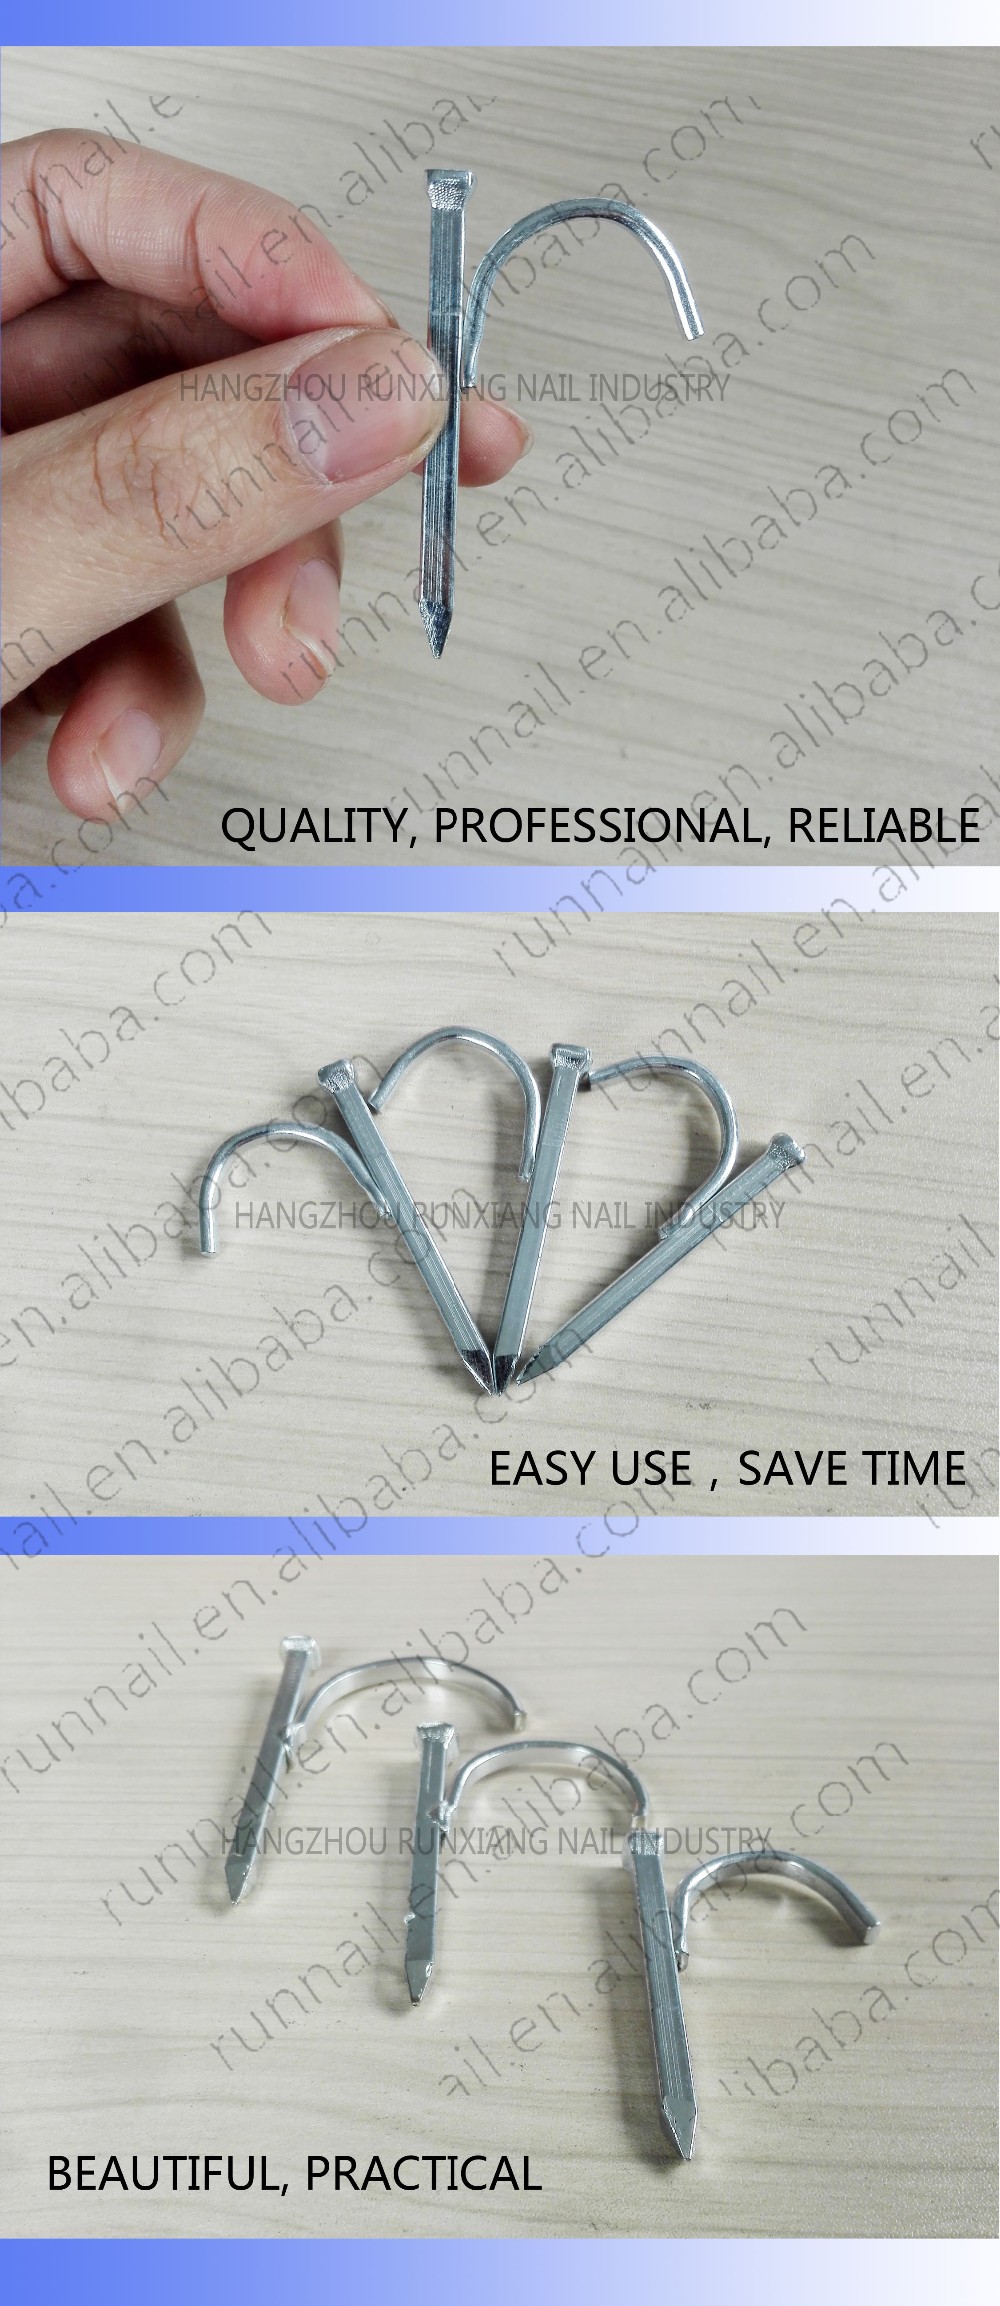 [20 Years] Steel Conduit Hook Nail / Steel Pipe Clip Nails / Steel Nail Strap